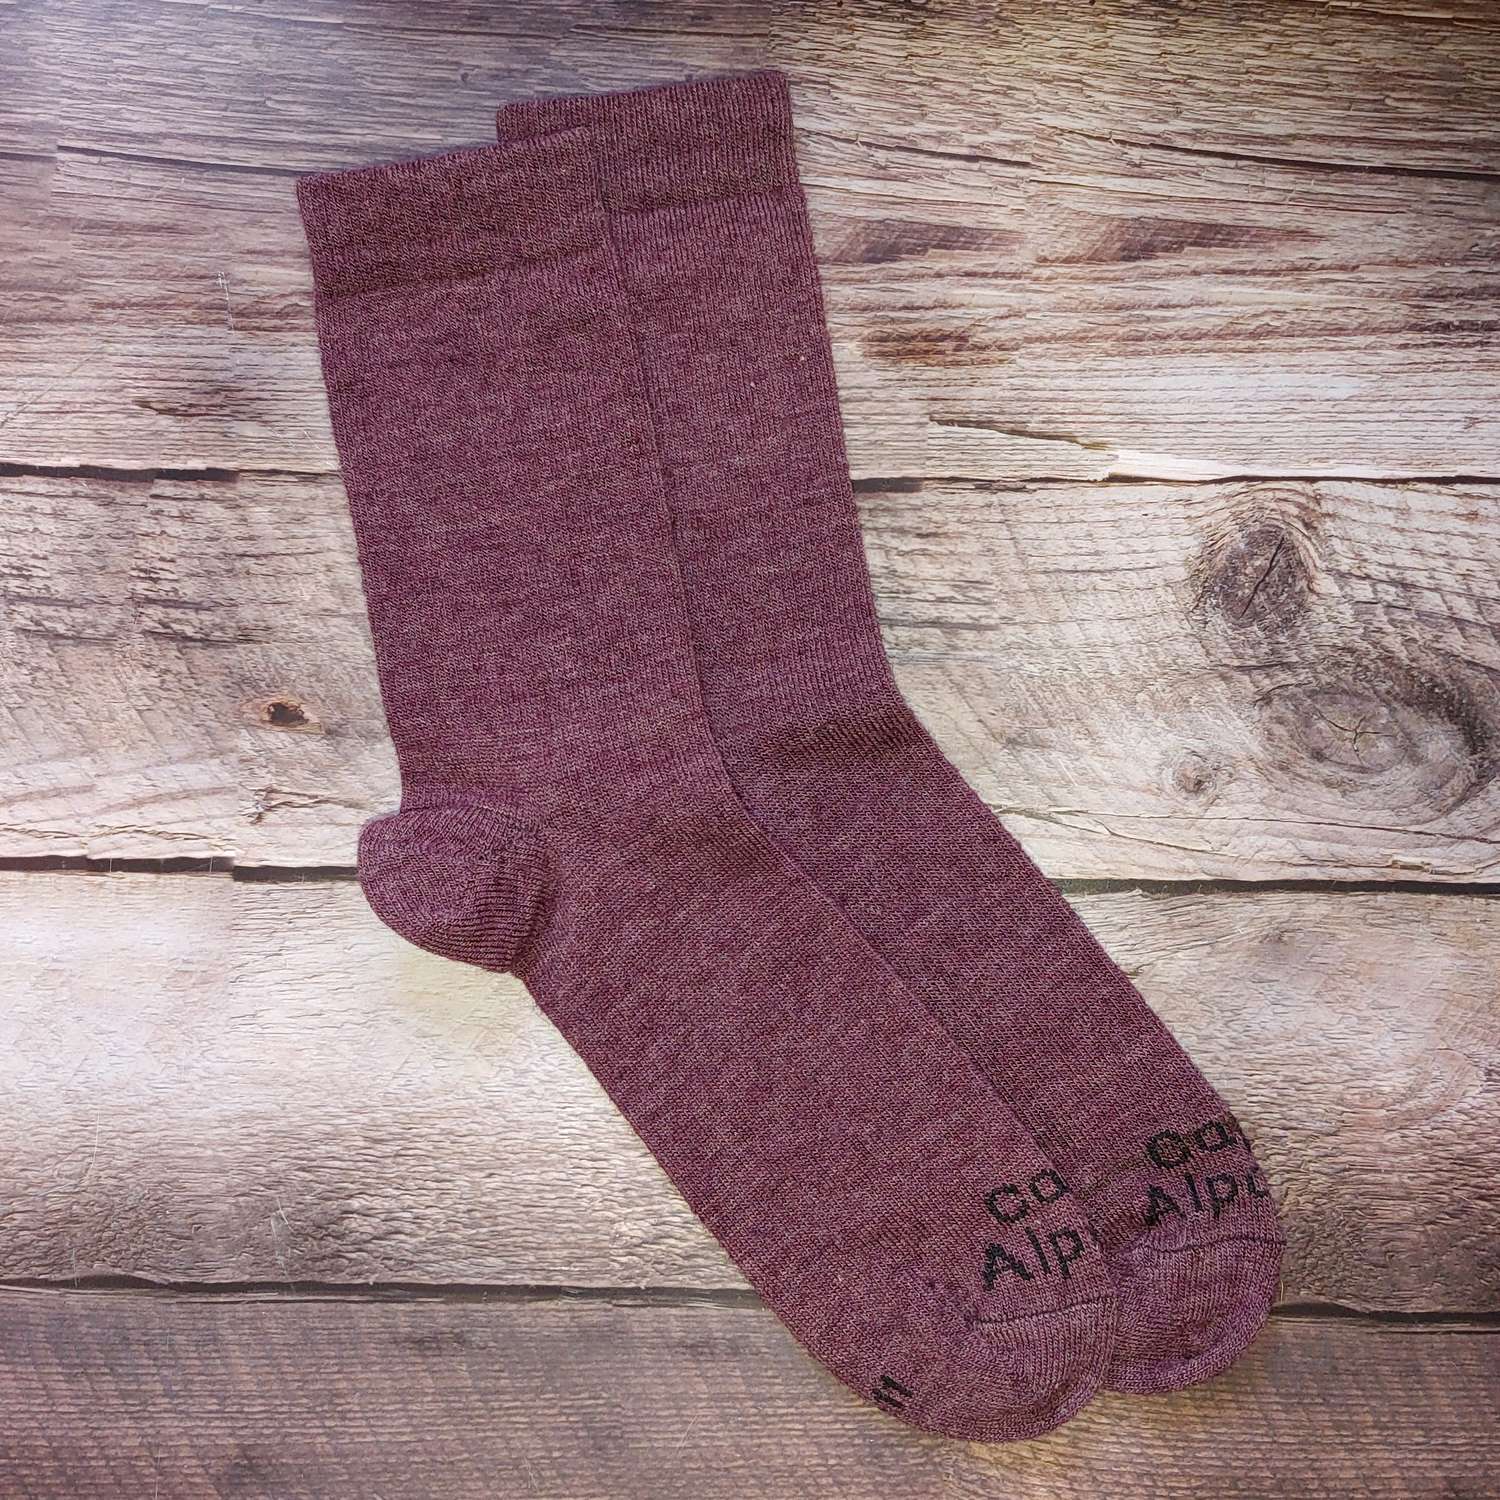 Leisure Socks made from Alpaca Fibre